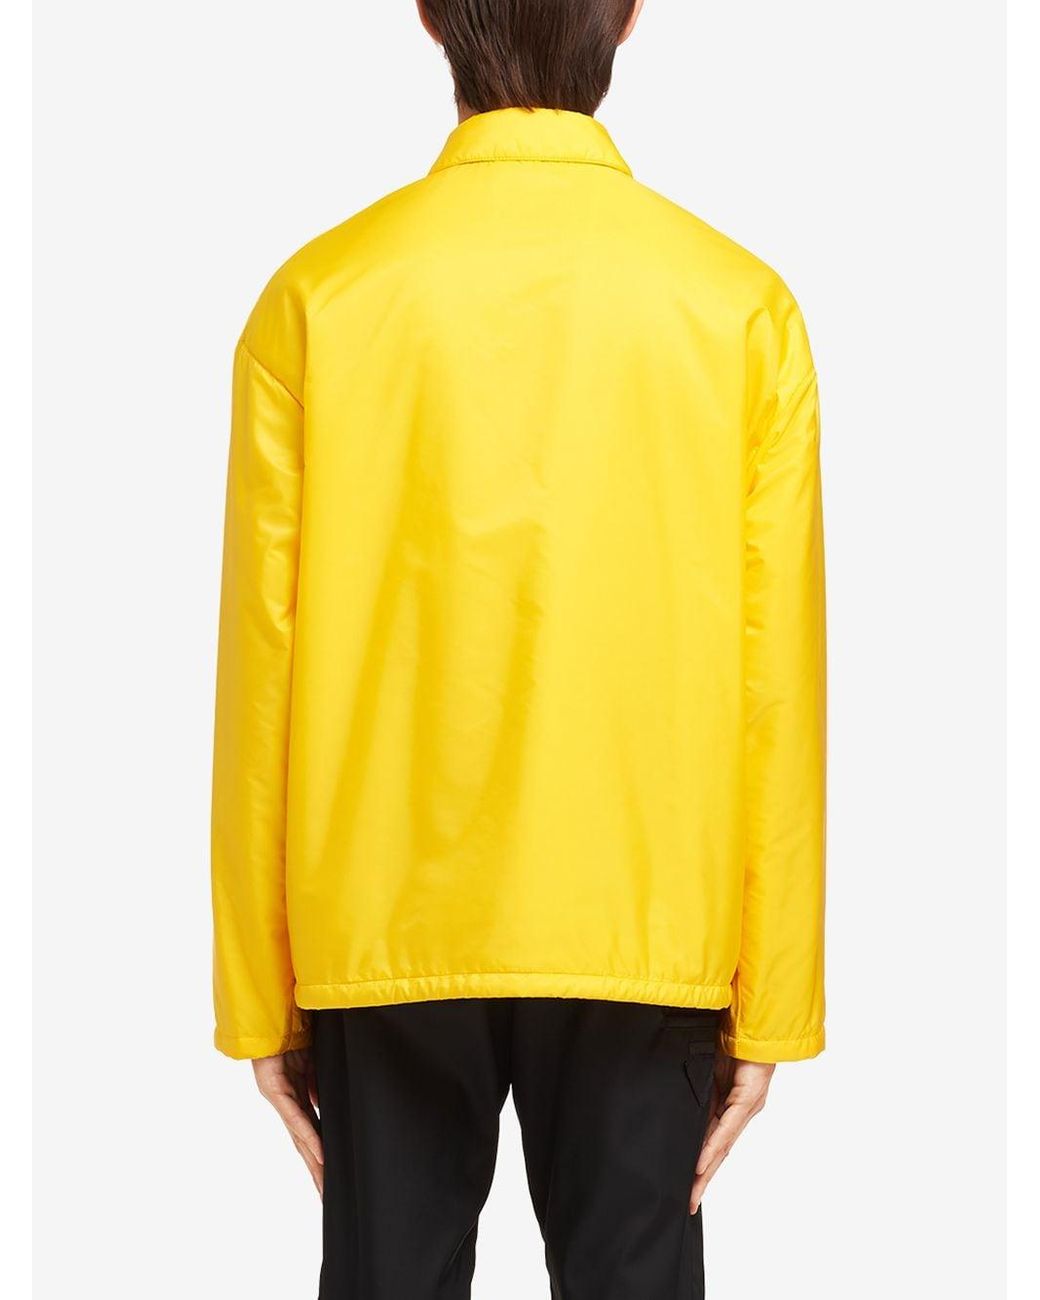 Prada Re-nylon Lightweight Jacket in Yellow for Men | Lyst